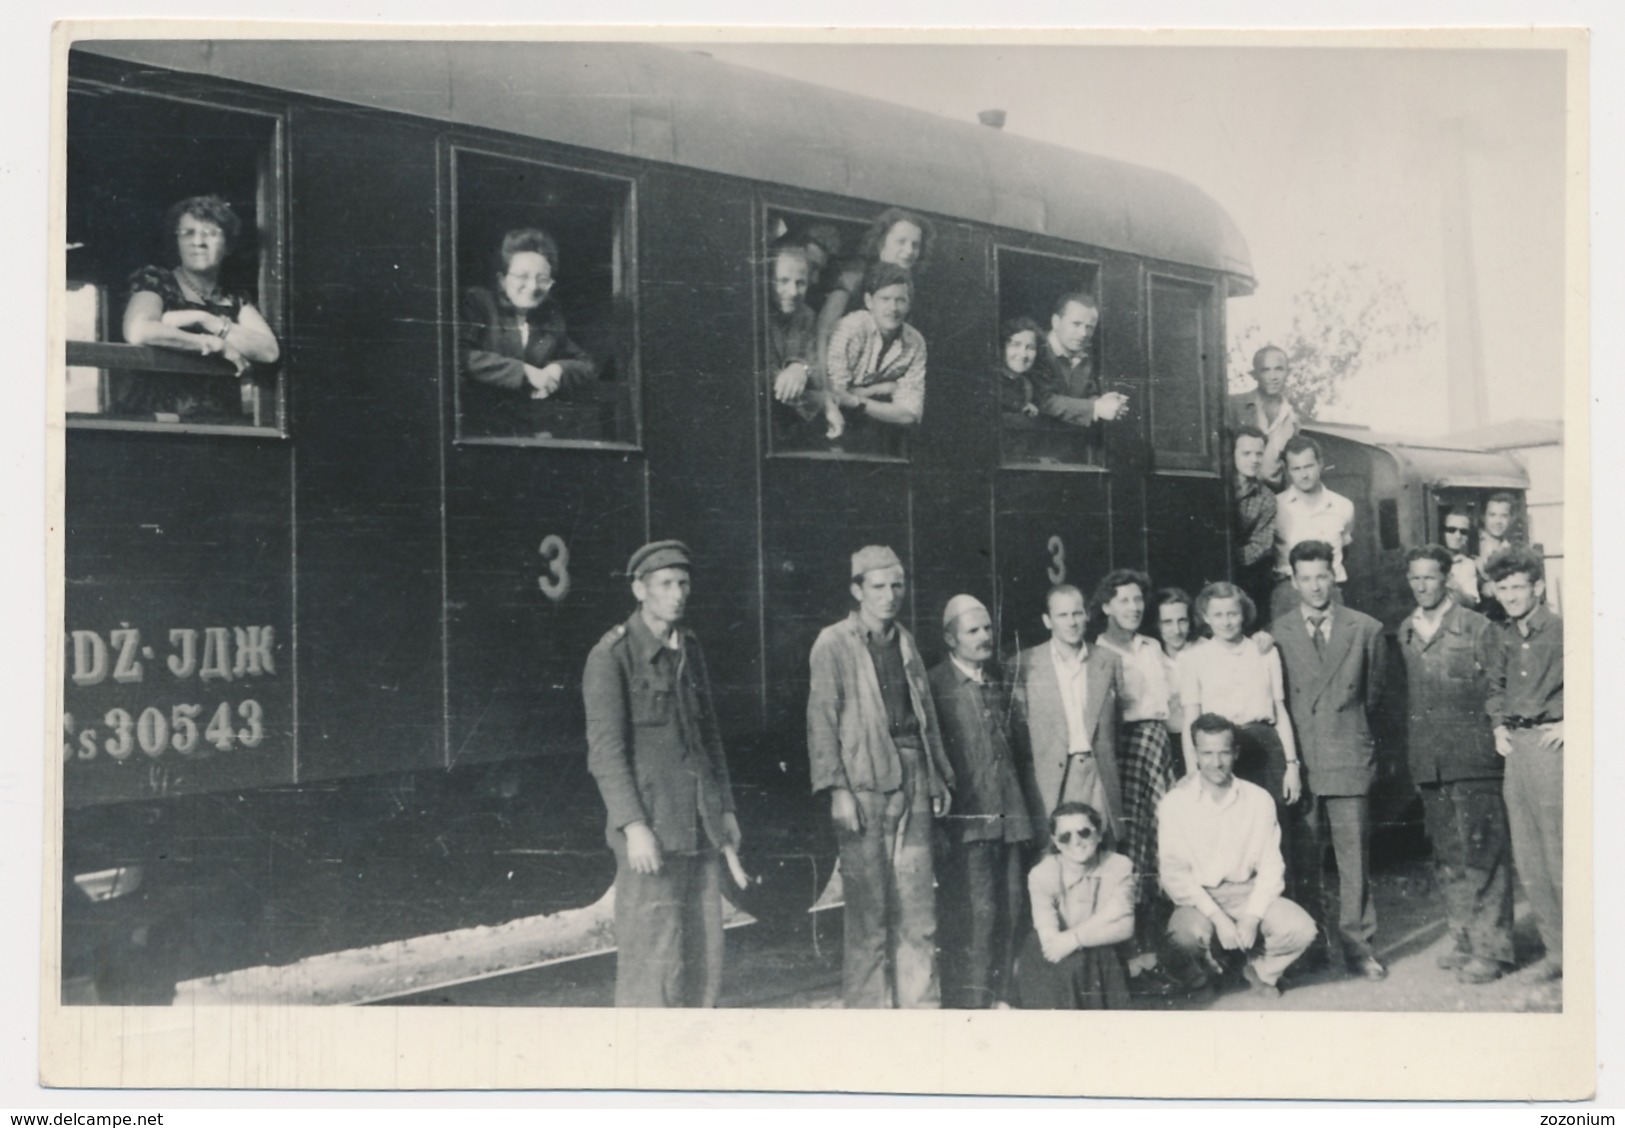 REAL PHOTO -  TRAIN In Railway Station Men Railway Workers  -  Jugoslovenska Zeleznica,  Old Photo - Treni